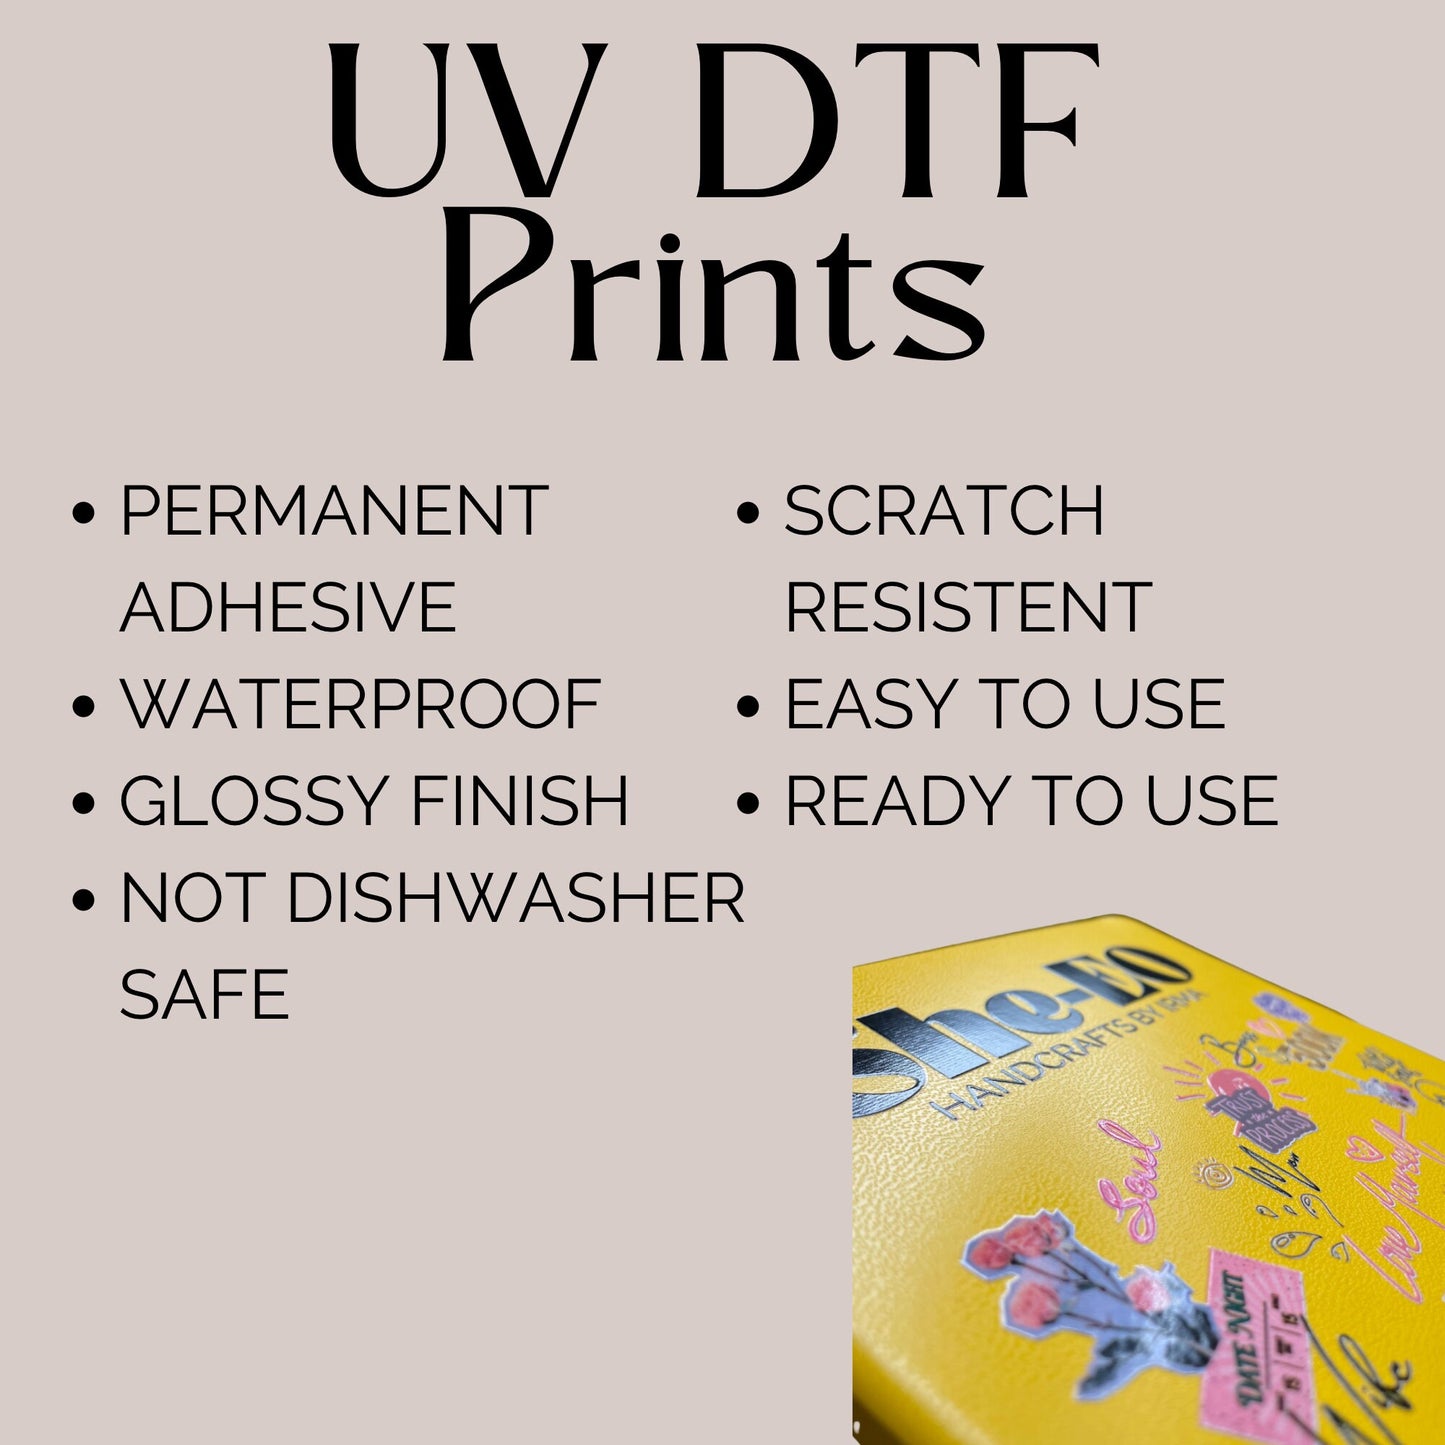 UV DTF Sticker Decal 4x4 100 Qty